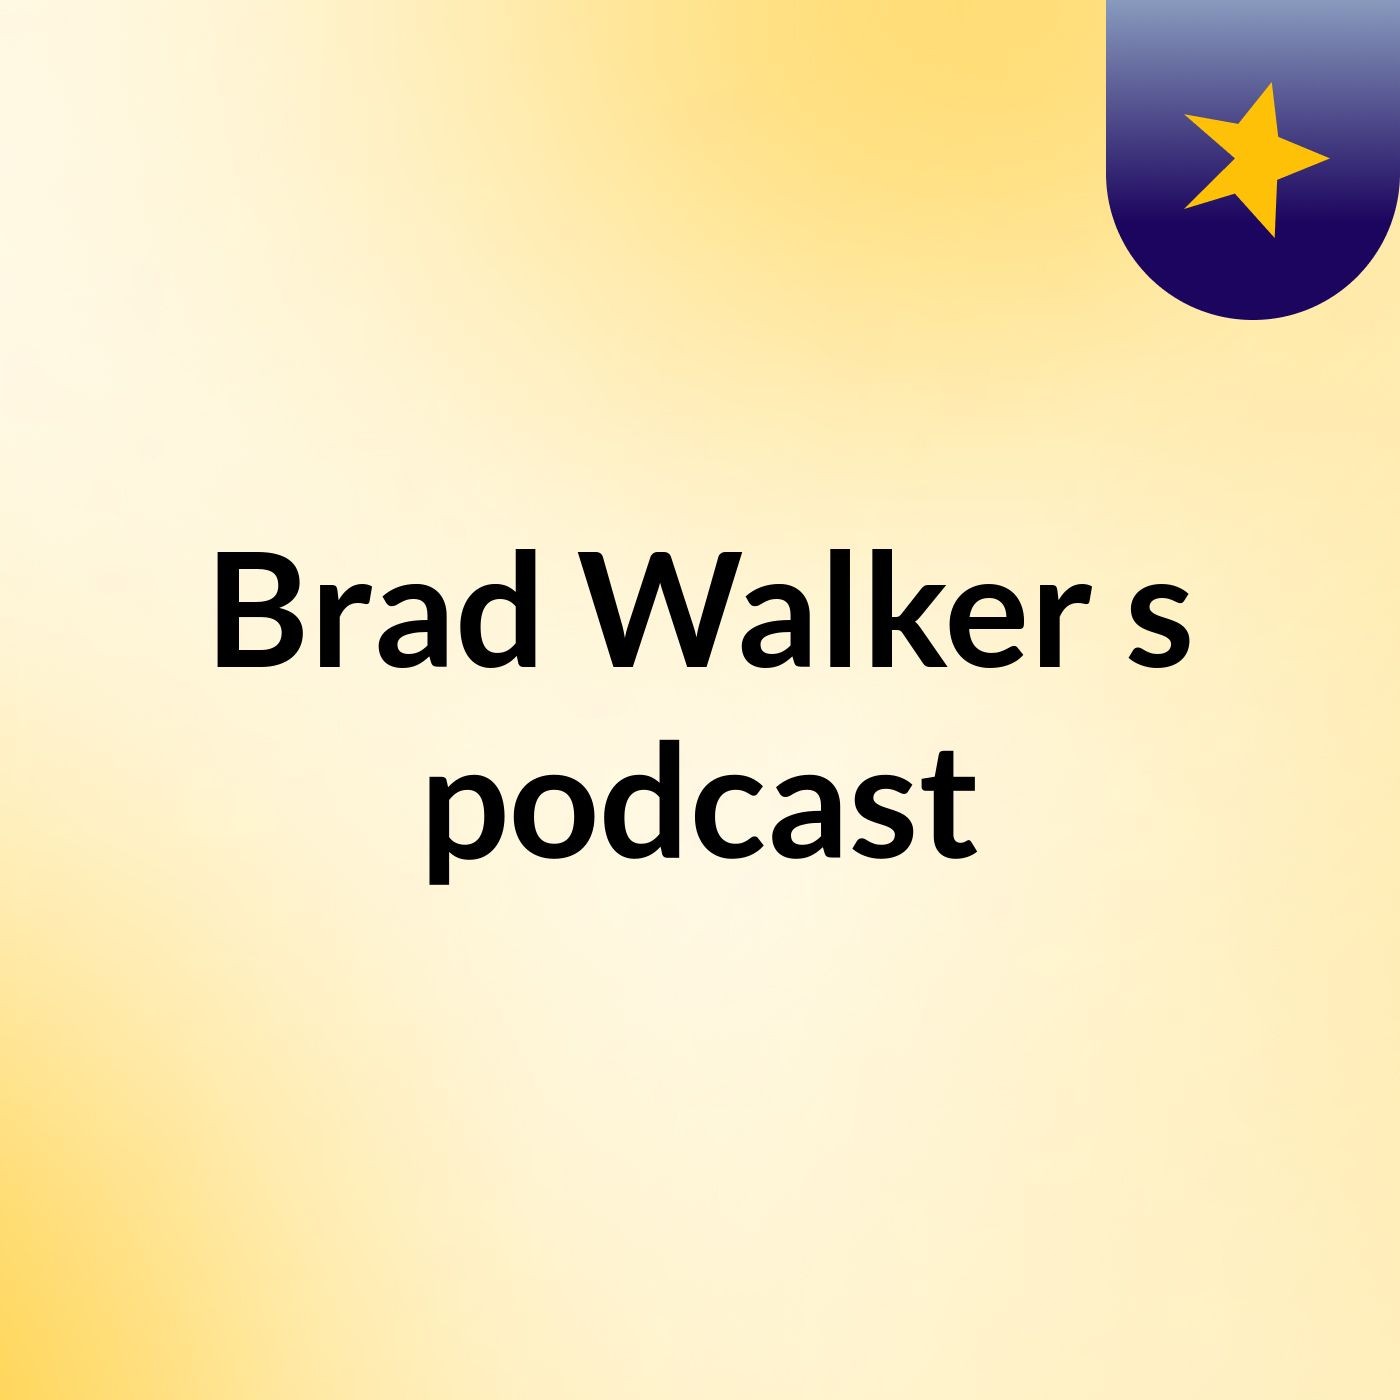 Episode 3 - Brad Walker's podcast